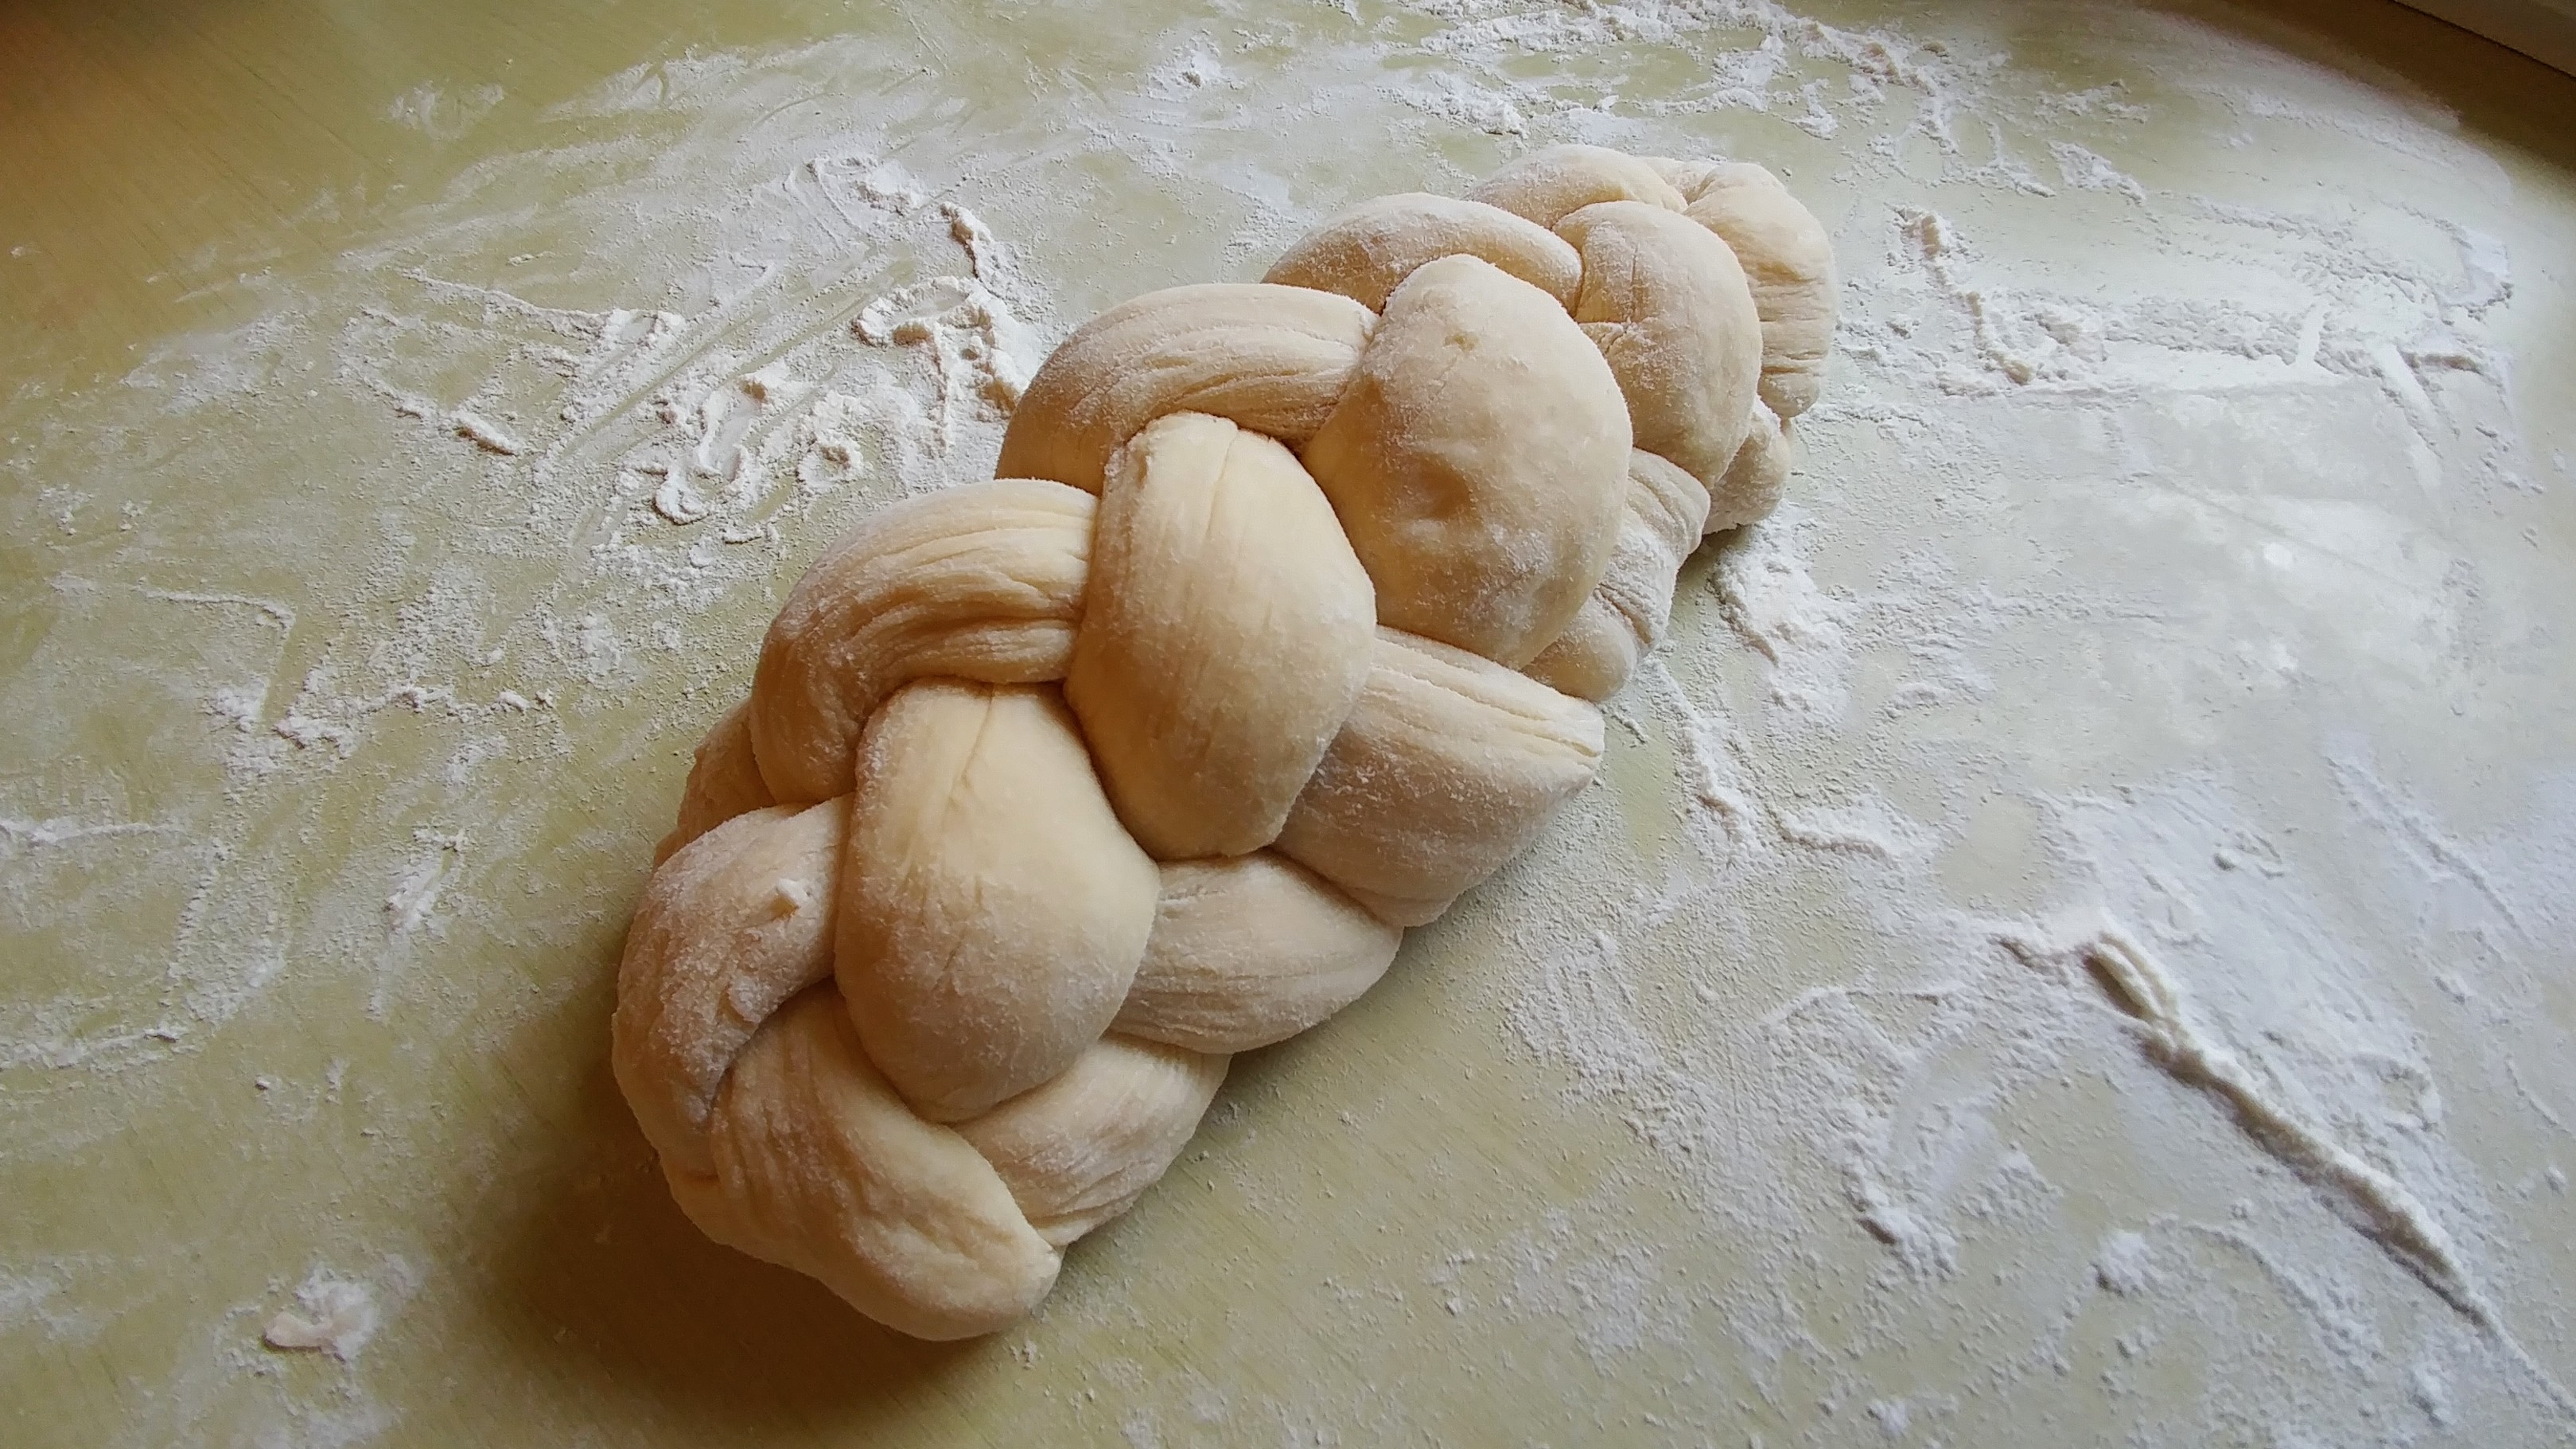 Braided challah dough â€“ https://www.kimwerker.com